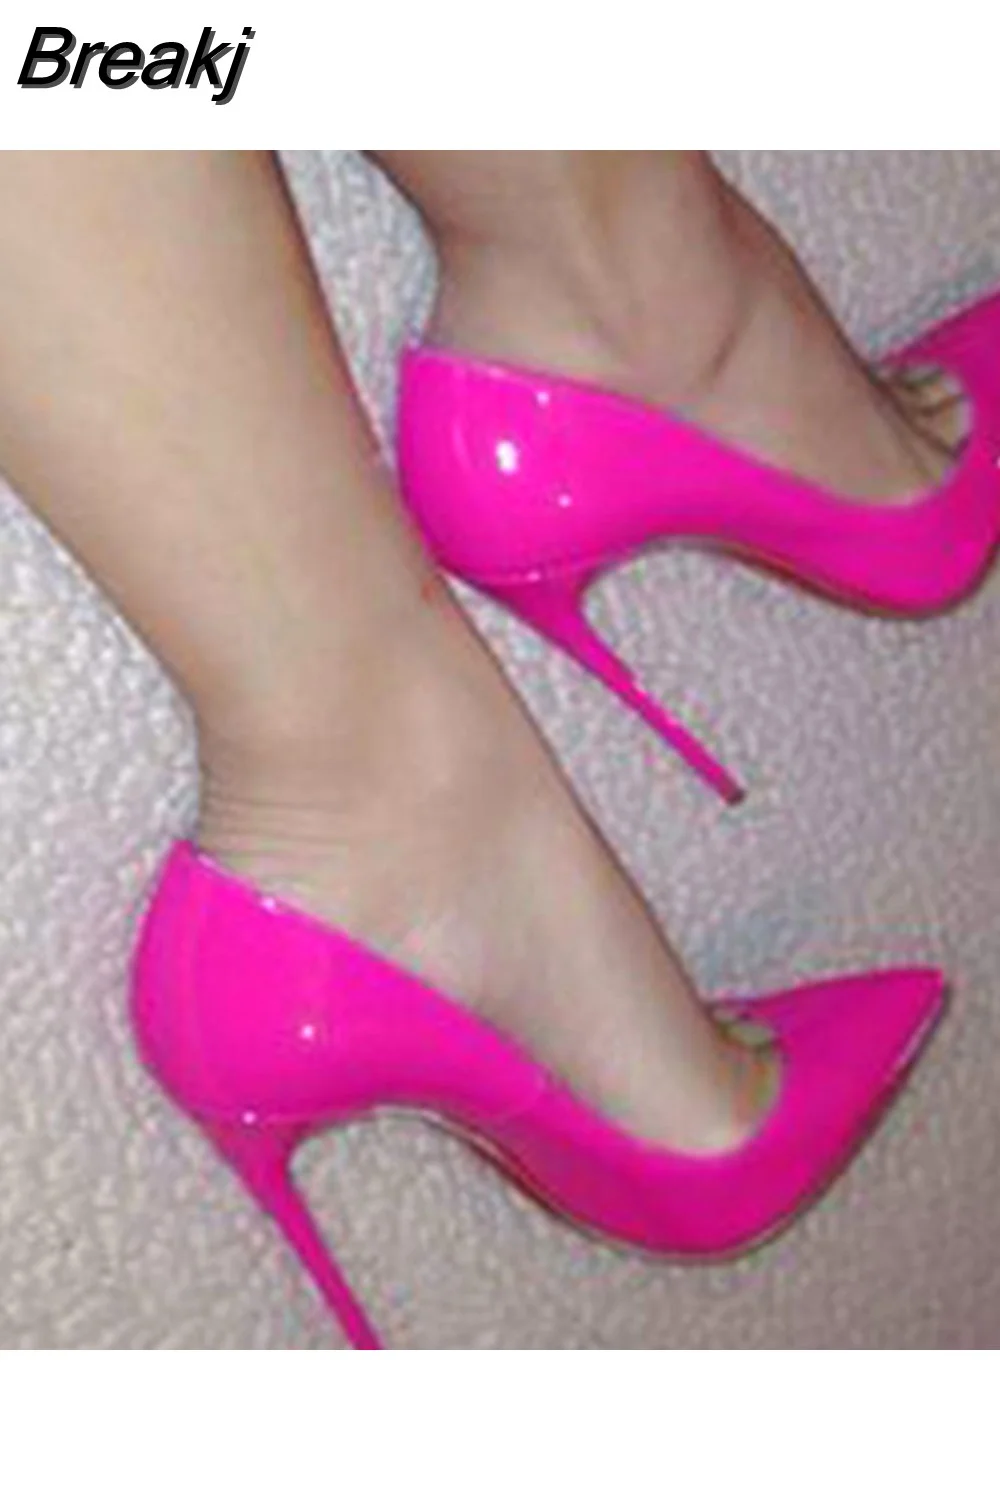 Breakj Rose dress pumps sexy pointed toe 12cm thin high heel party nightclub energy gorgeous 10cm 8cm lady shoes QP058 ROVICIYA